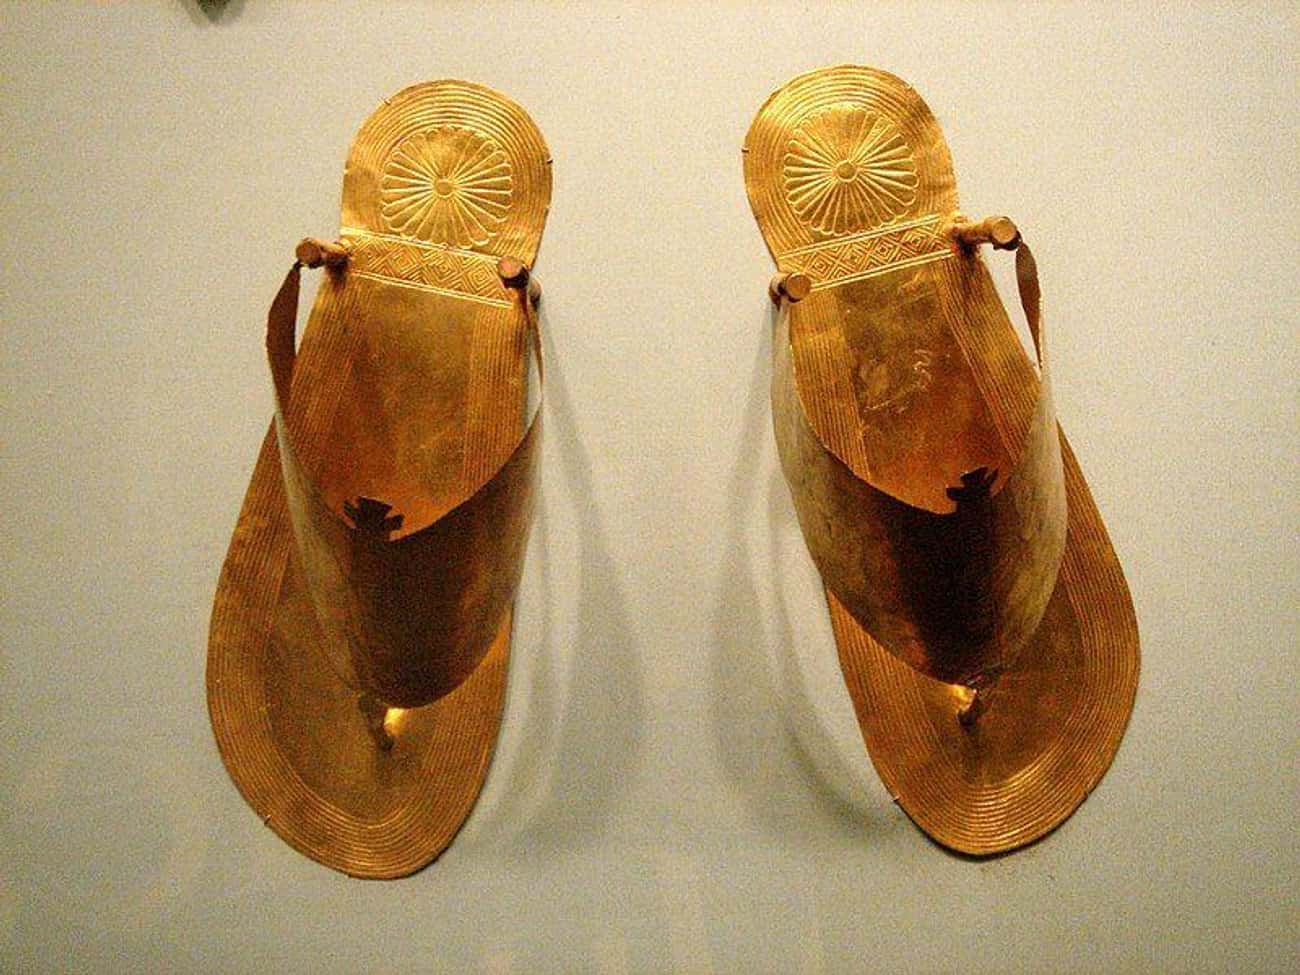 Gold Sandals, 15th Century BCE